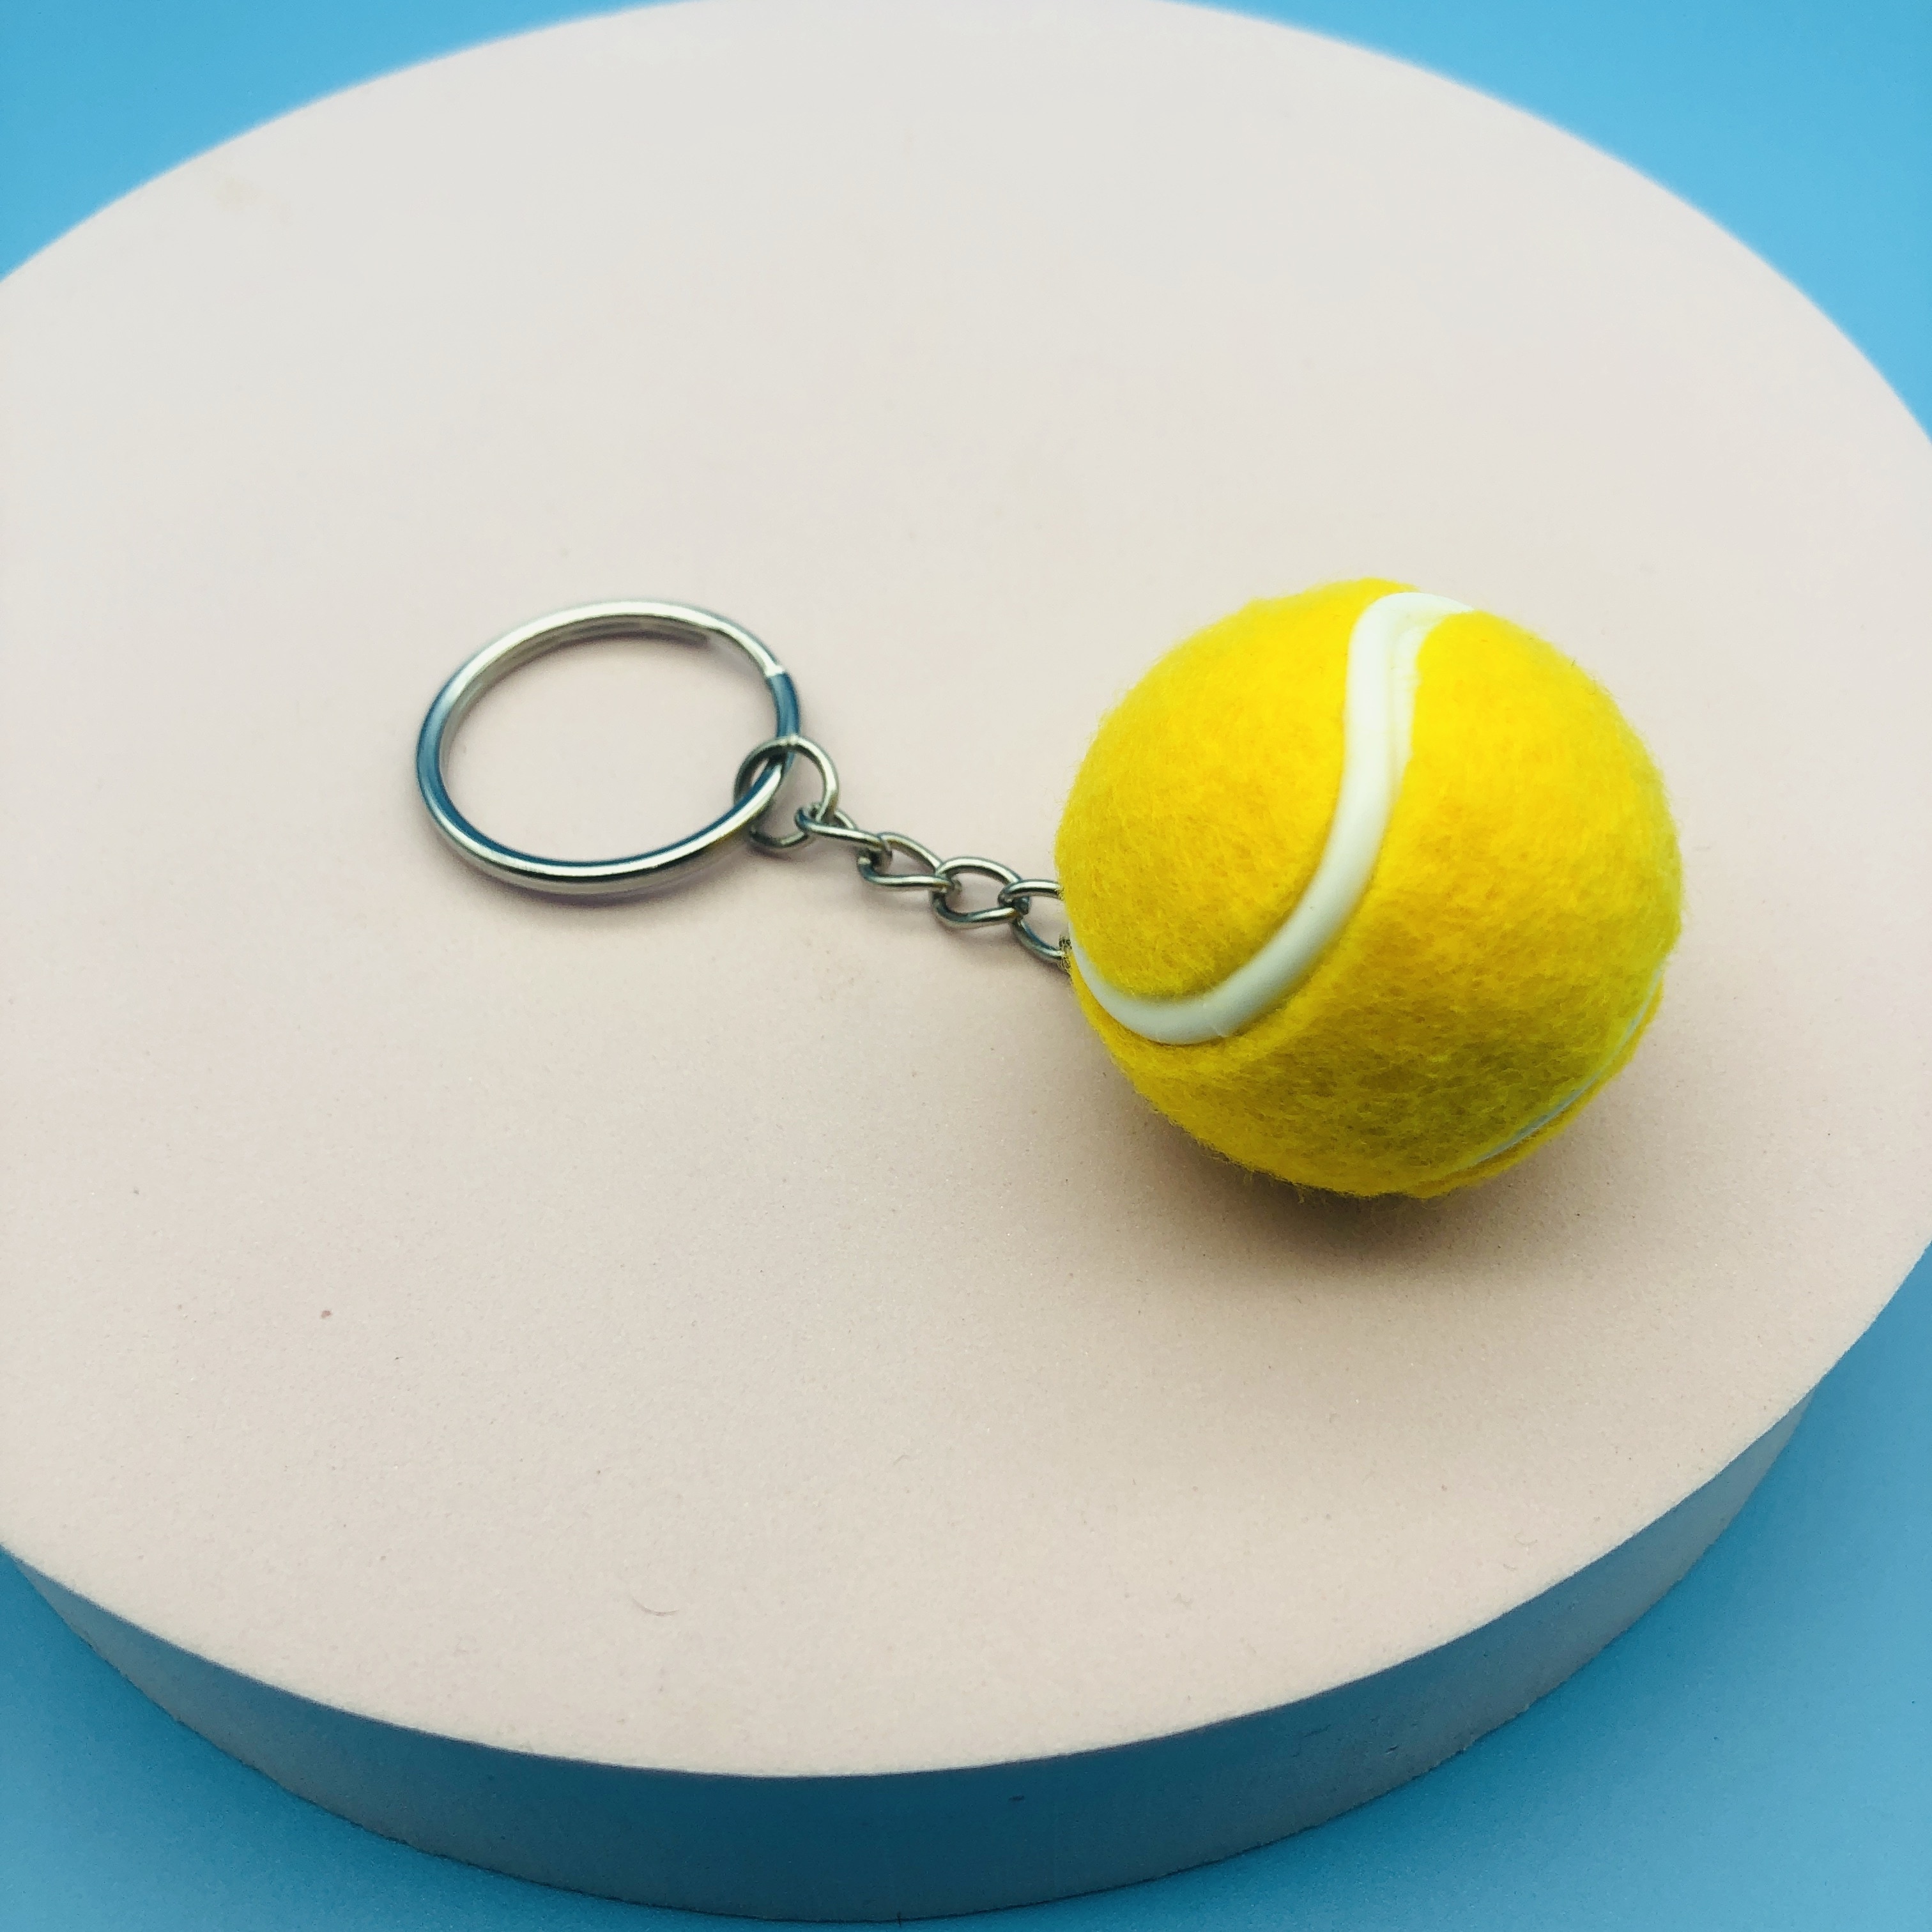 Funny Tennis Ball Mini Keychain for Women Men Racket Key Chain